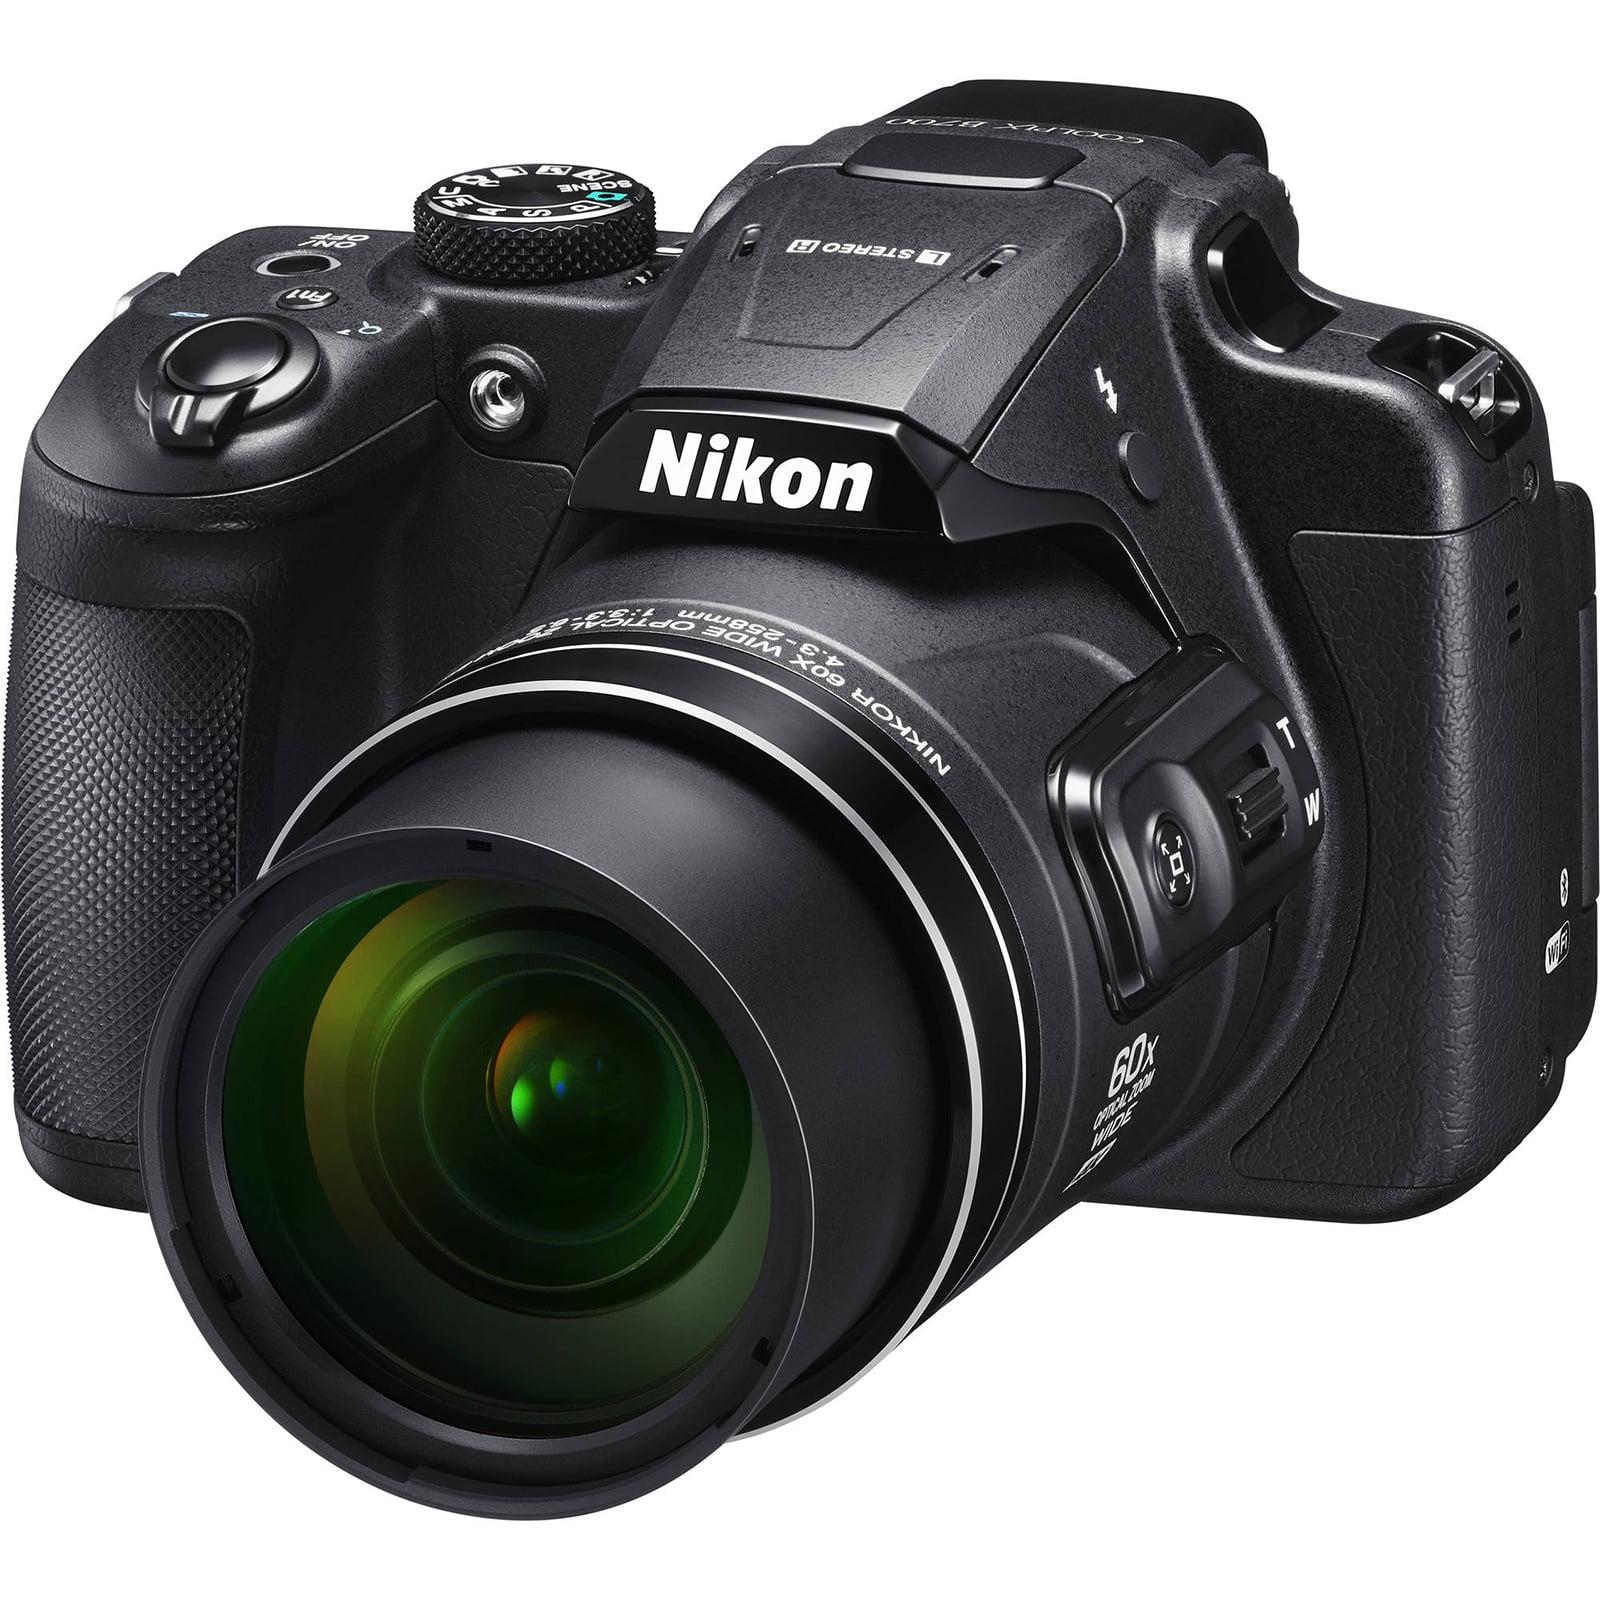 NEW Lens Zoom Unit For Nikon Coolpix P610 B700 Digital Camera Repair Part 